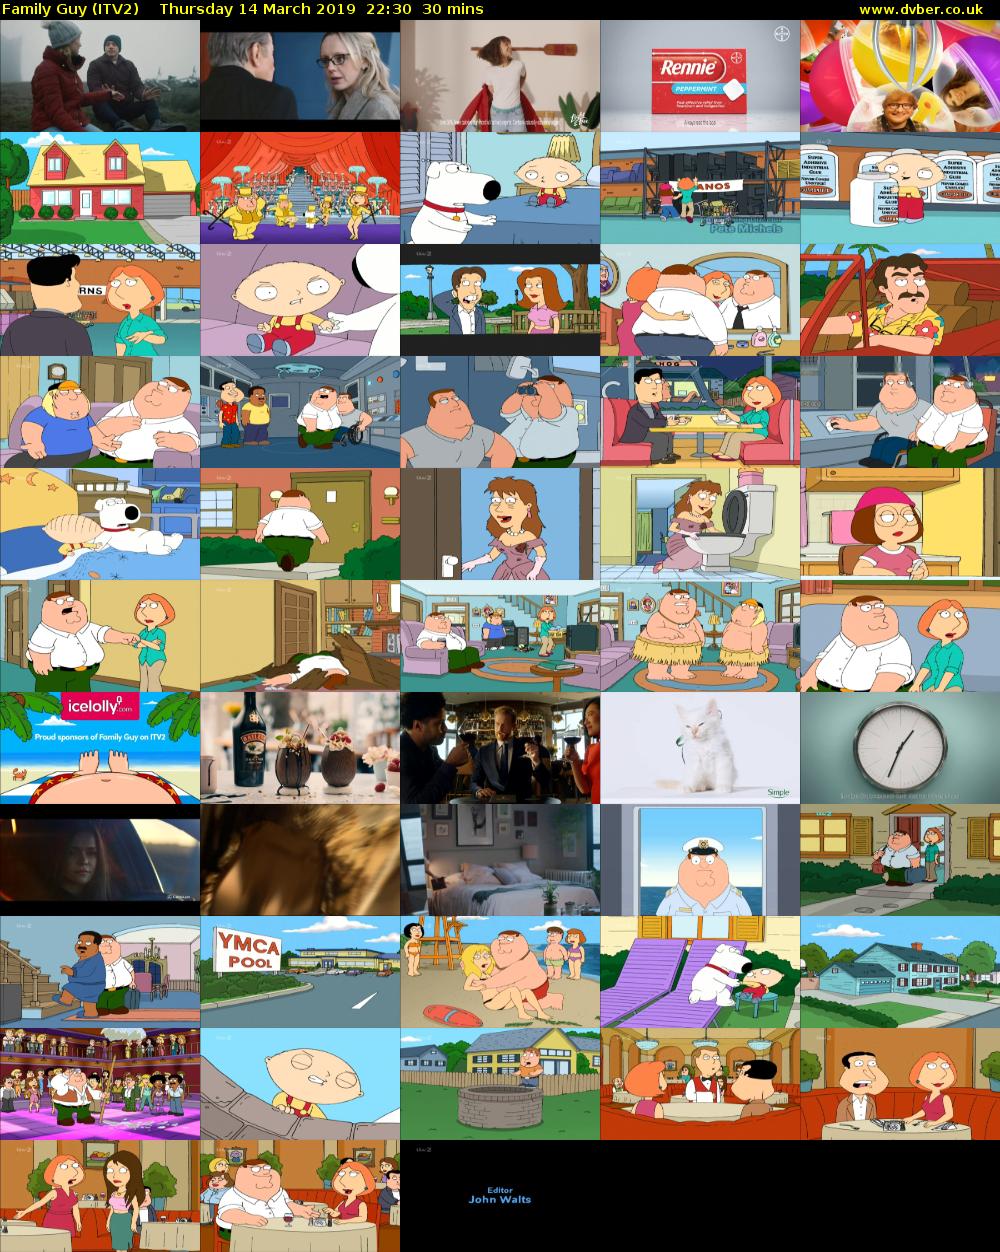 Family Guy (ITV2) Thursday 14 March 2019 22:30 - 23:00